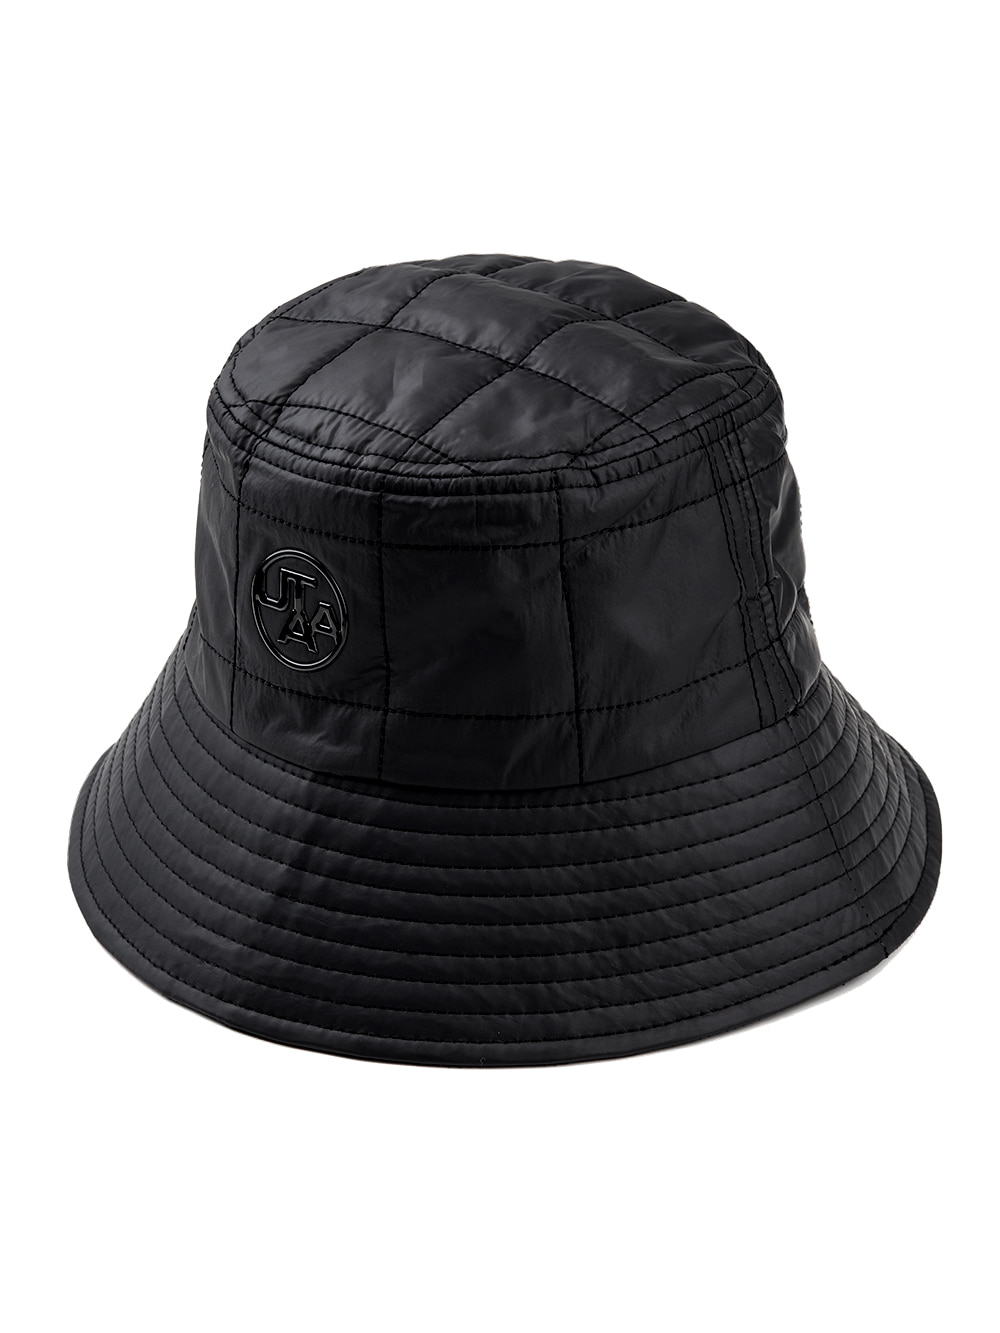 UTAA Square Quilting Bucket Hat : Black (UA4GCF744BK)